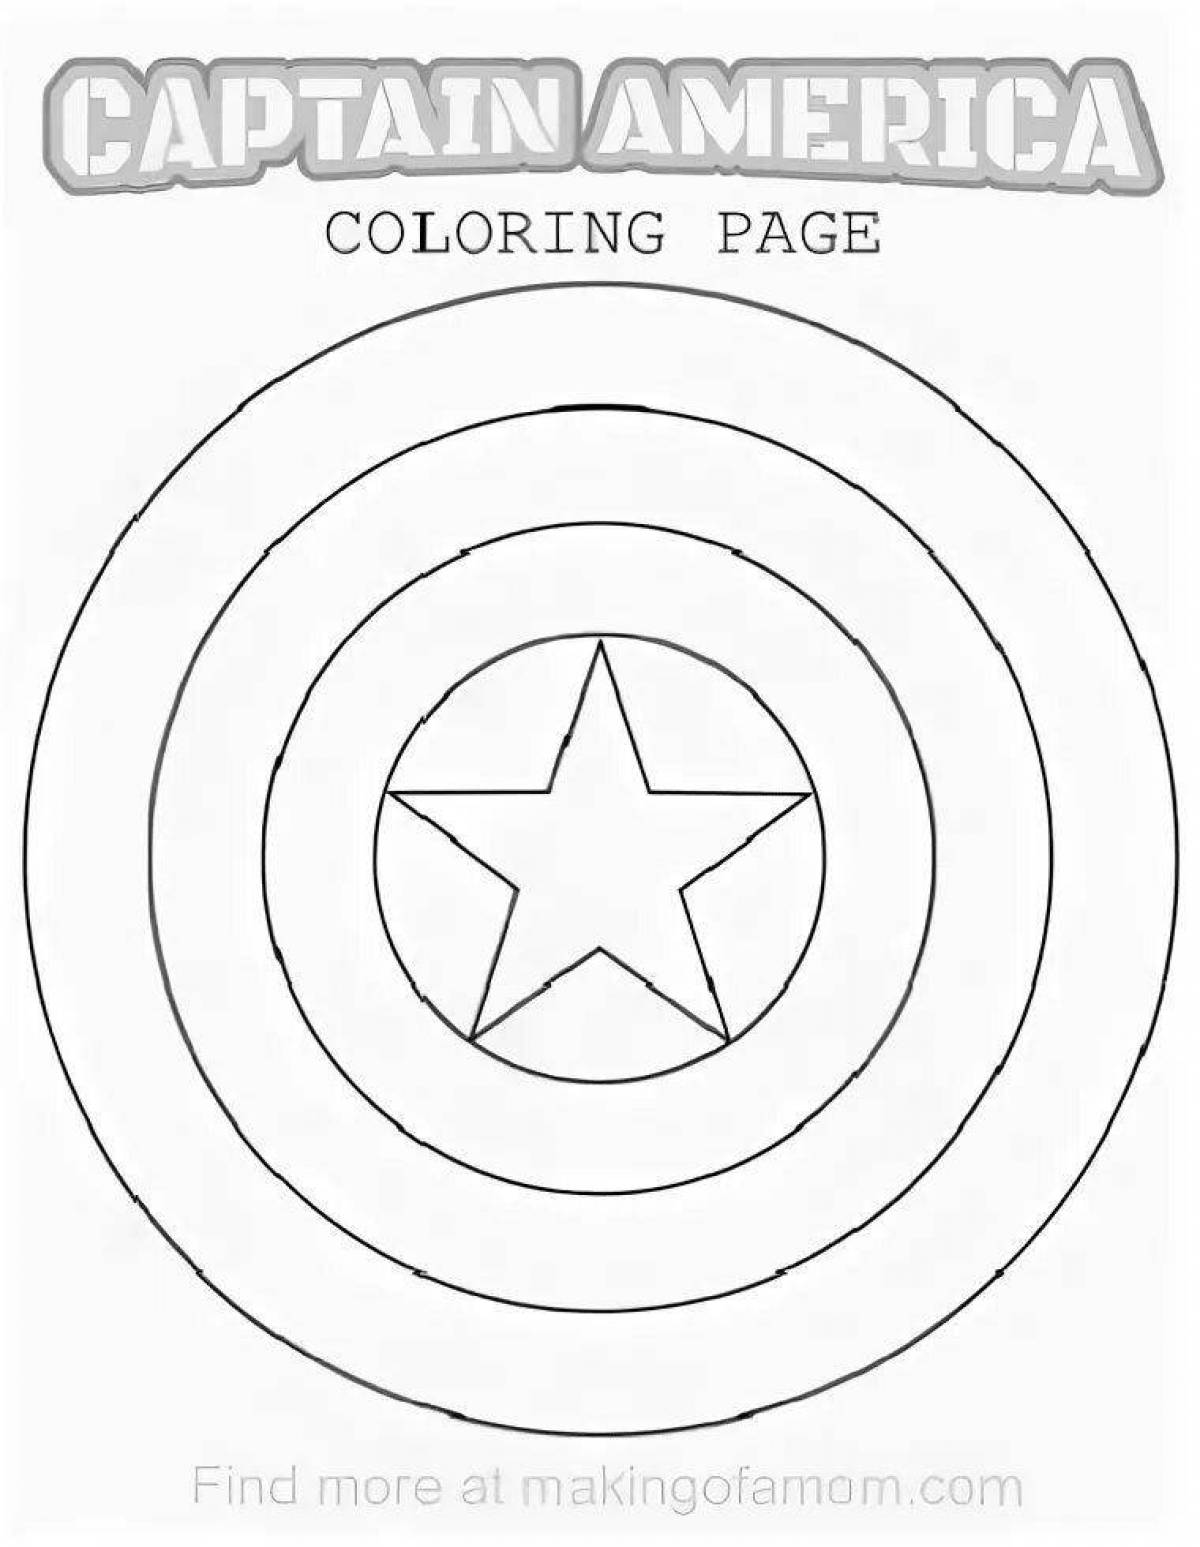 Captain america's dazzling shield coloring